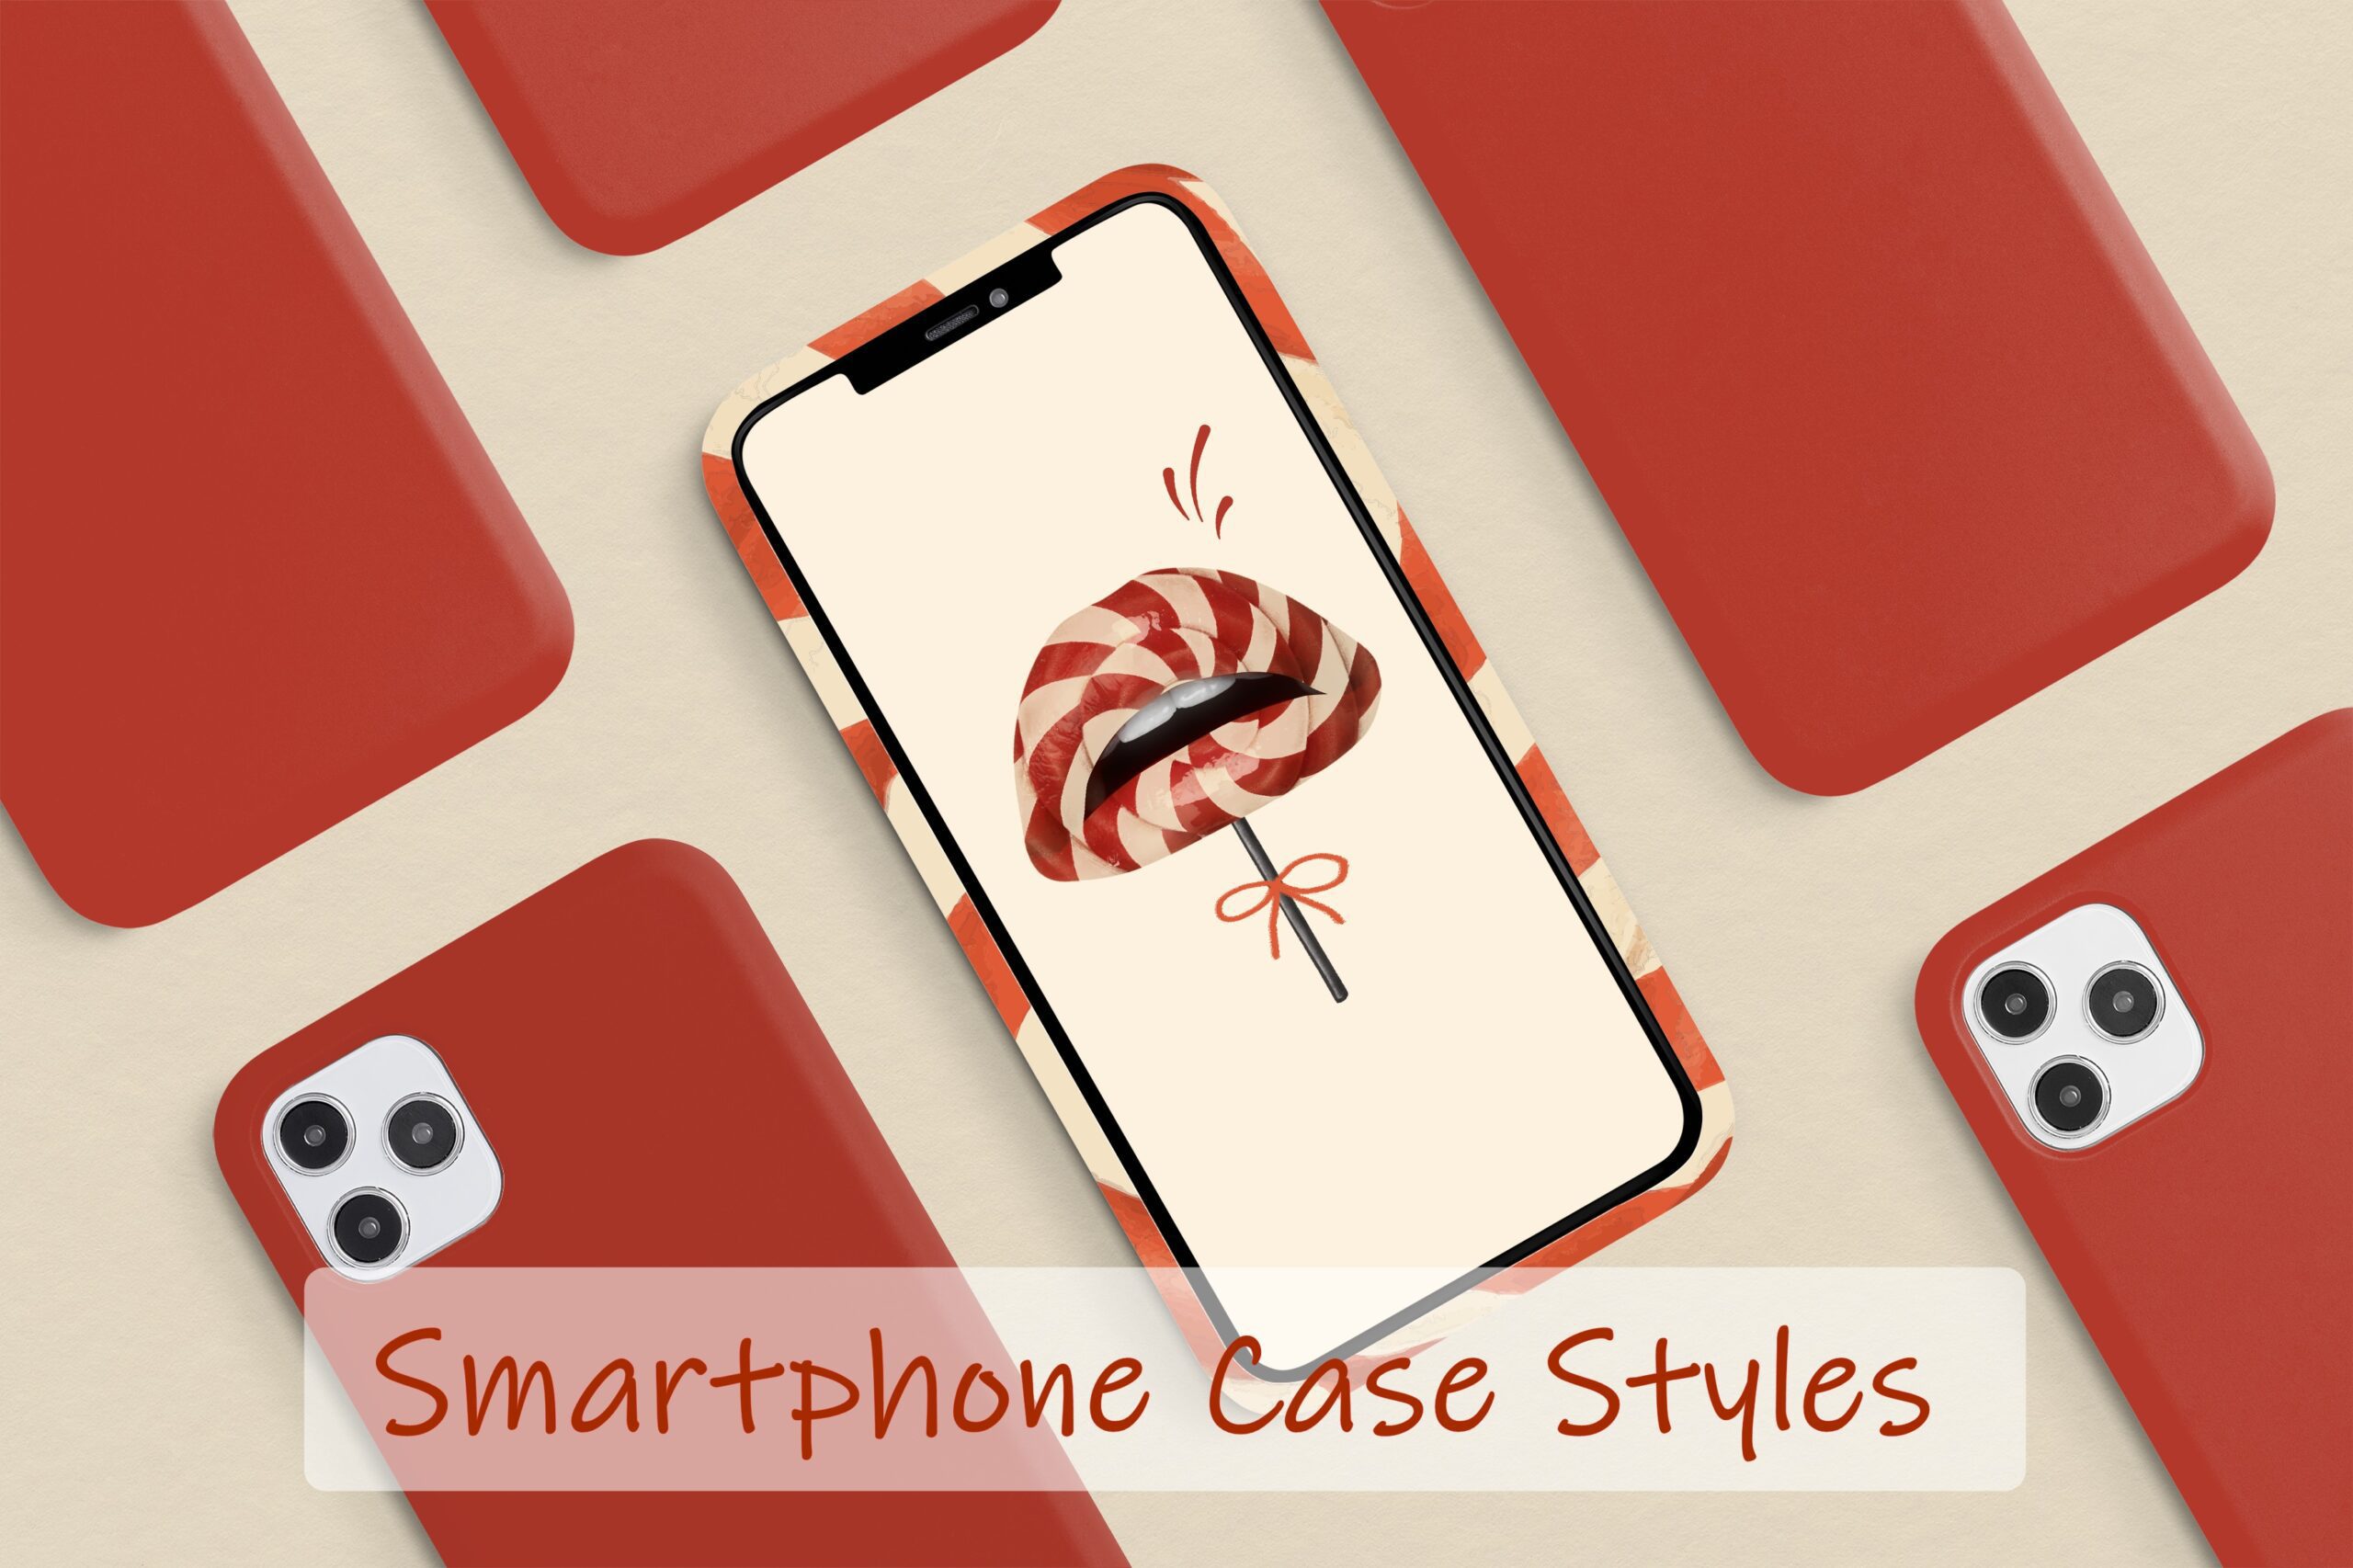 Smartphone Case Style